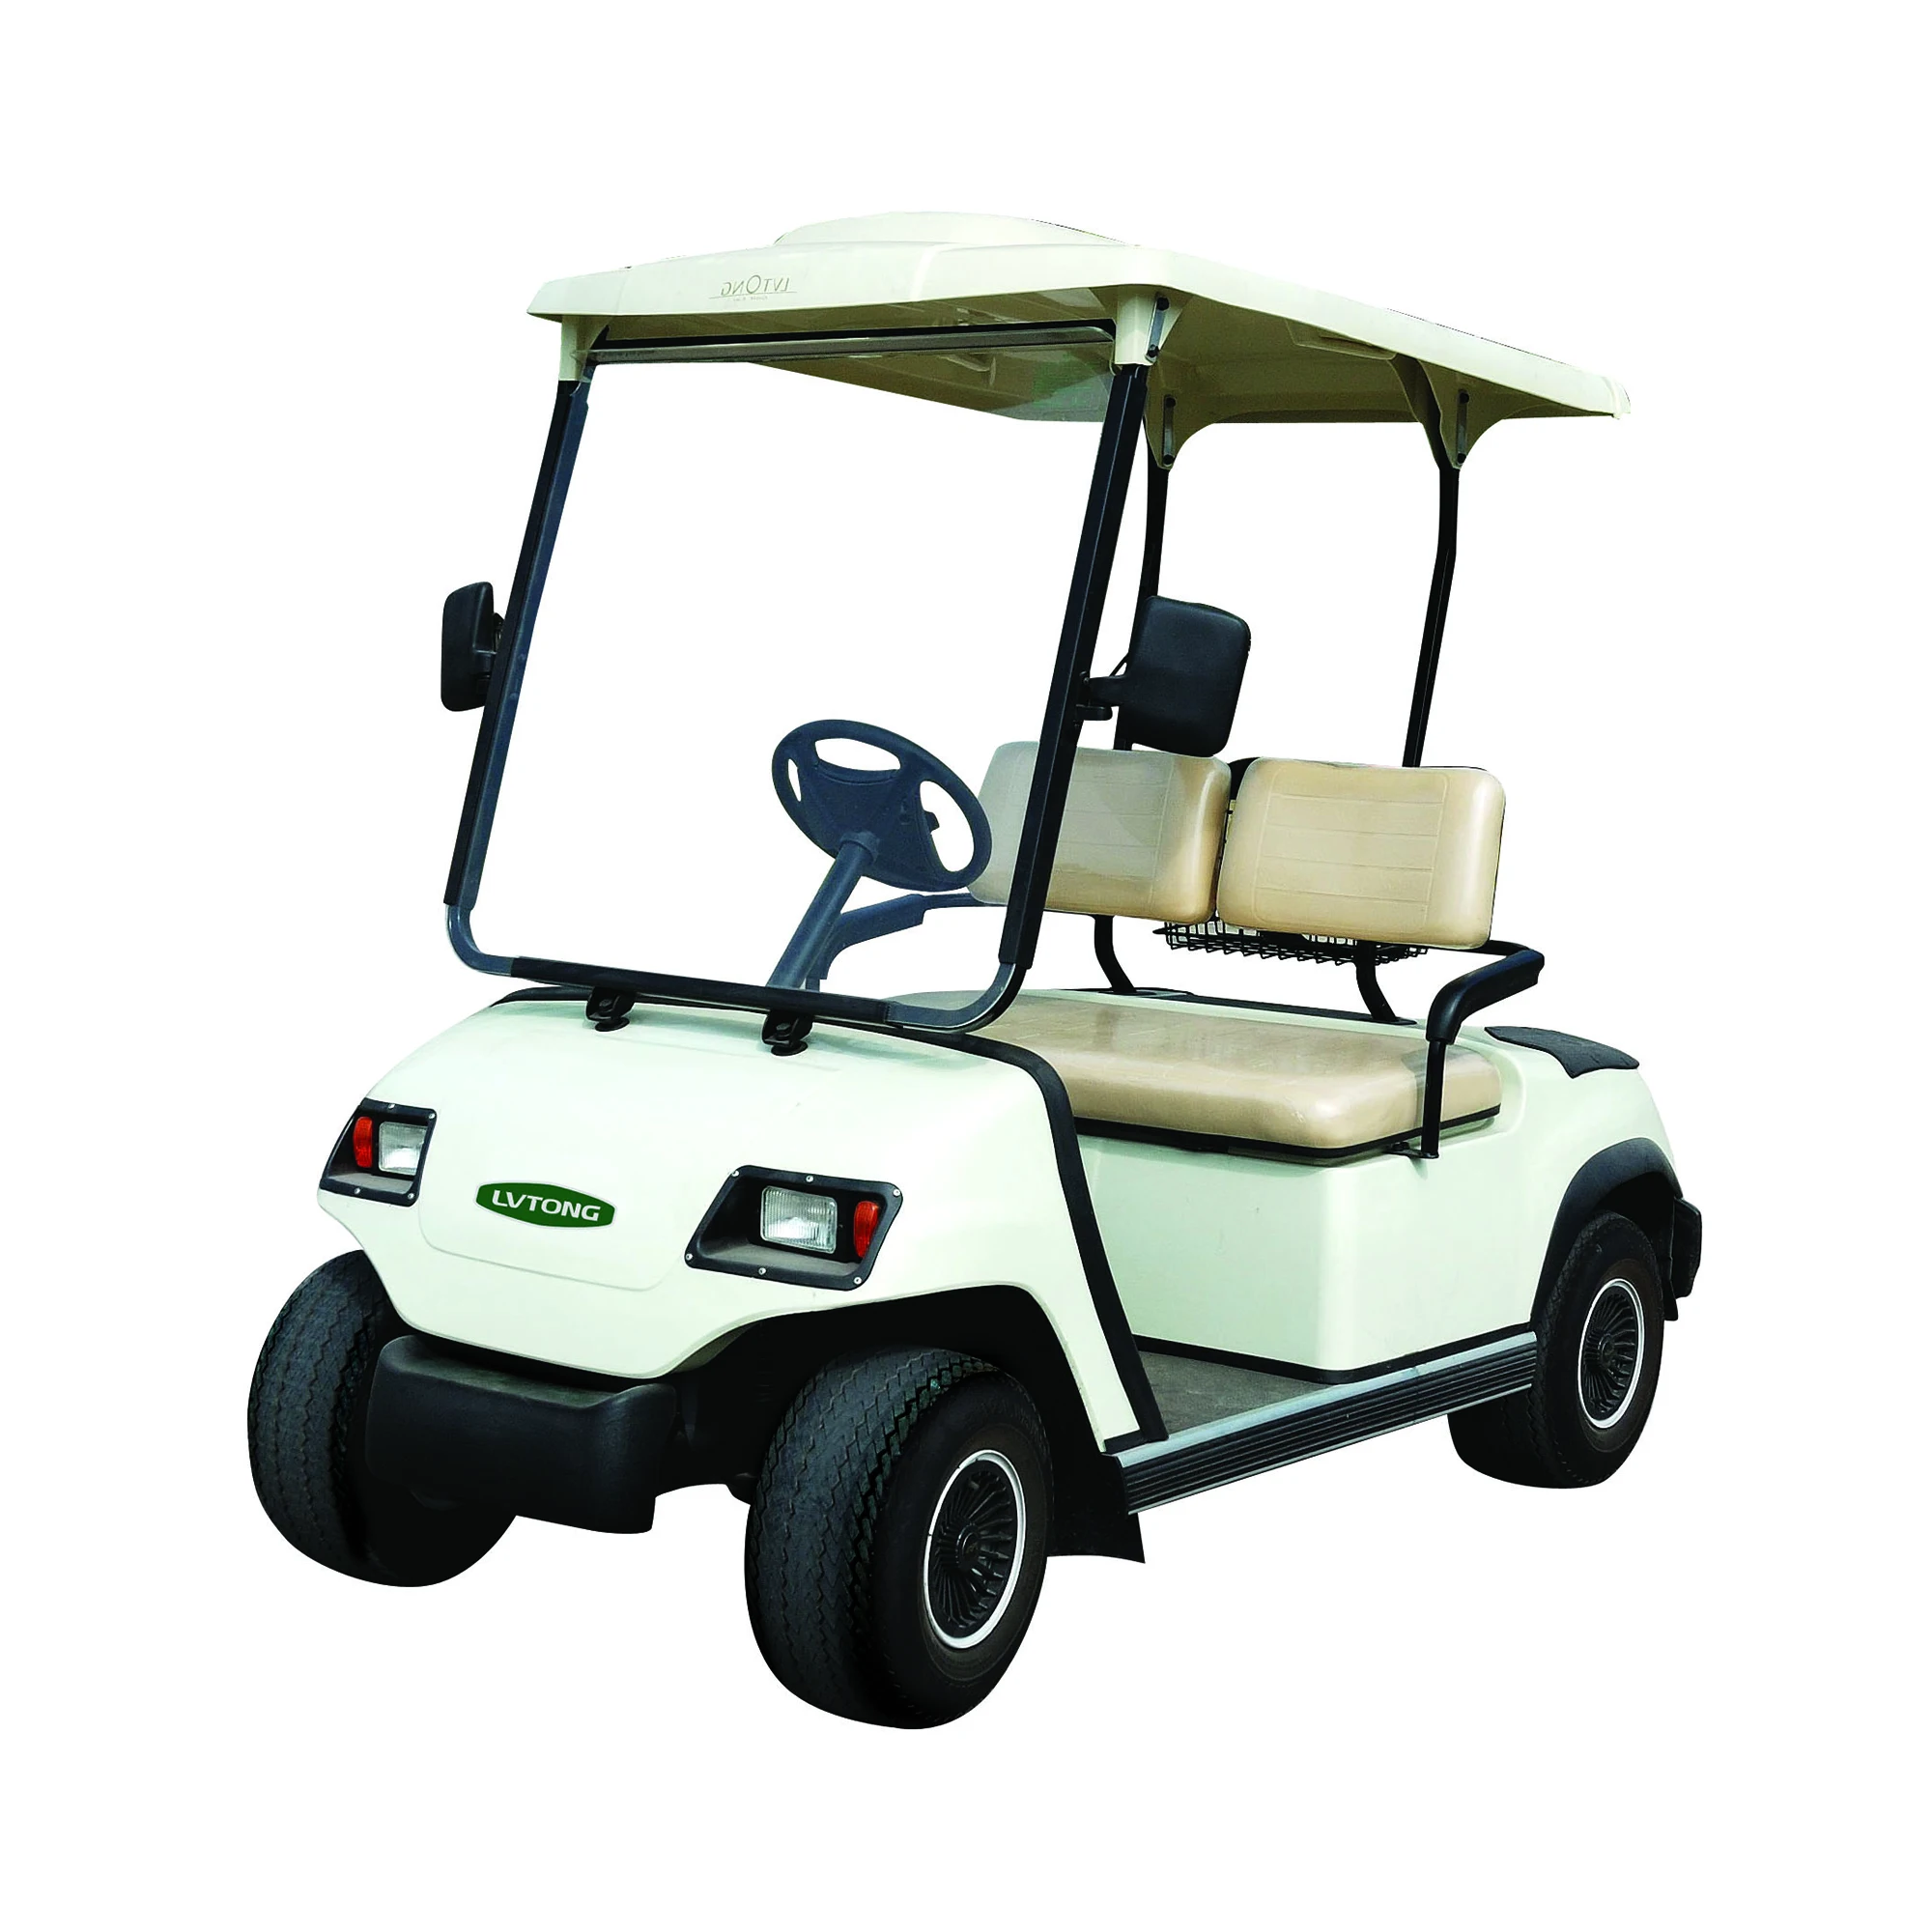 Importar 2 seats enclosed golf cart from China (LT-A2)